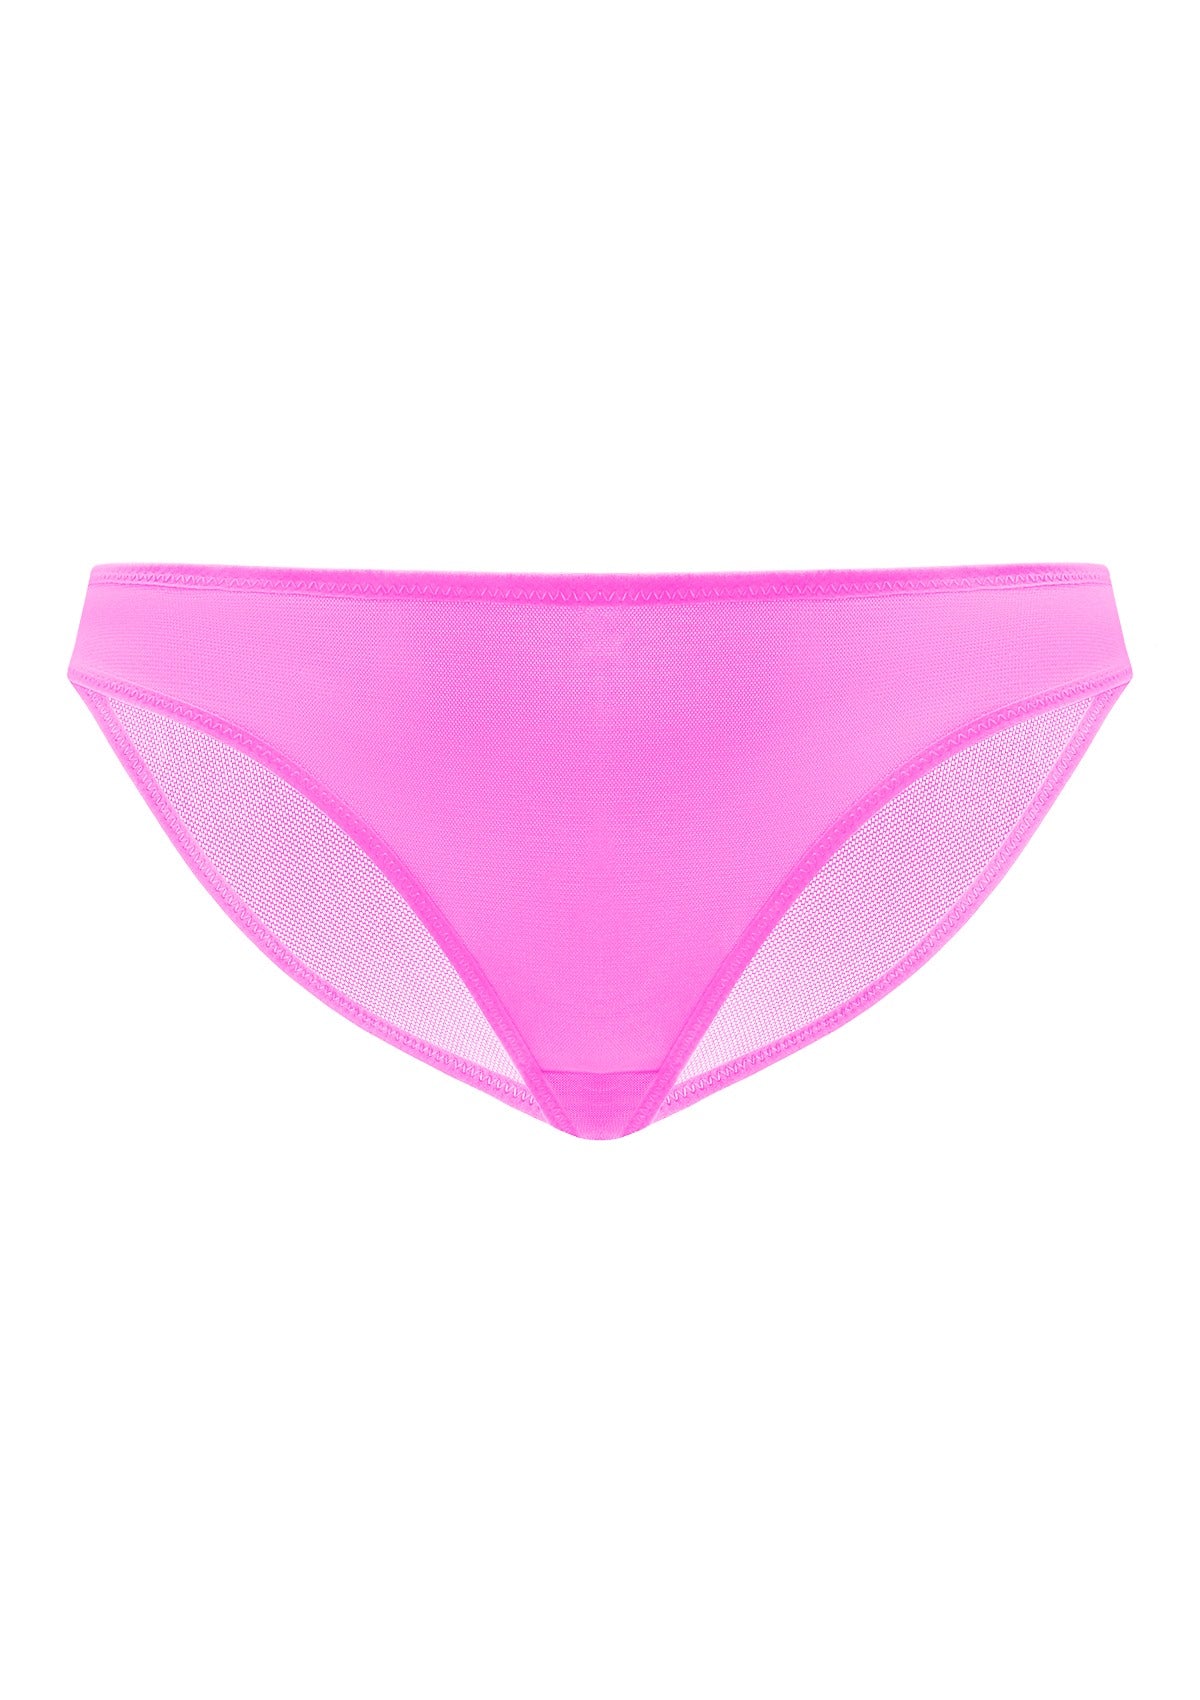 HSIA Billie Low Rise Breathable Soft Sheer Mesh Bikini Underwear - XXL / Barbie Pink